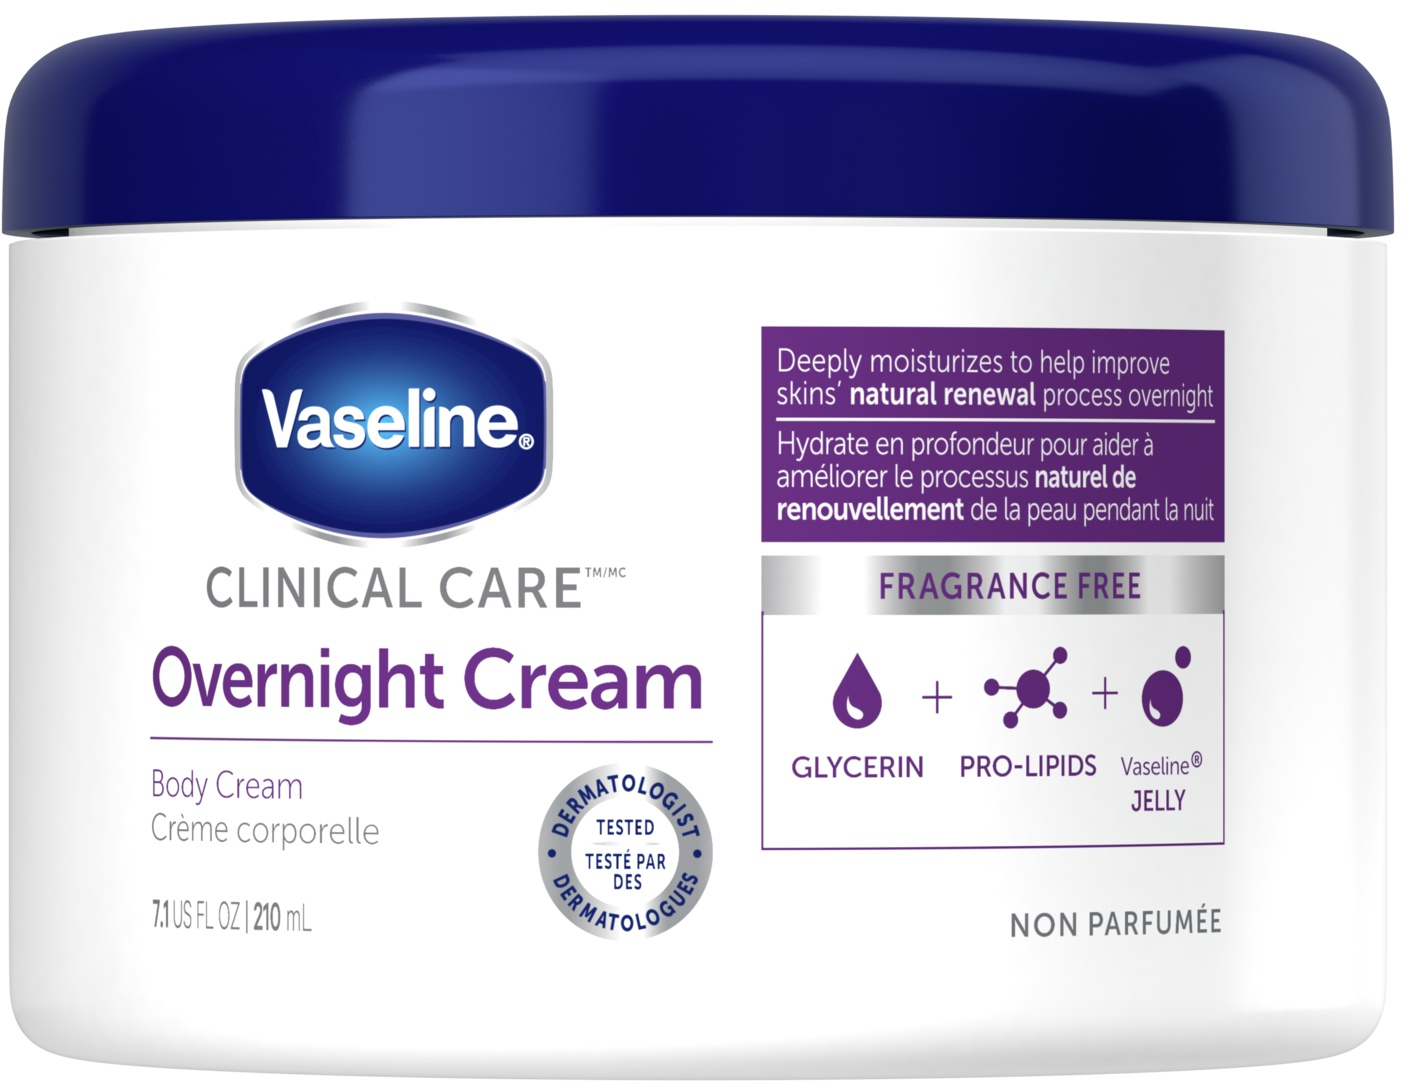 Vaseline Clinical Care, Overnight Cream